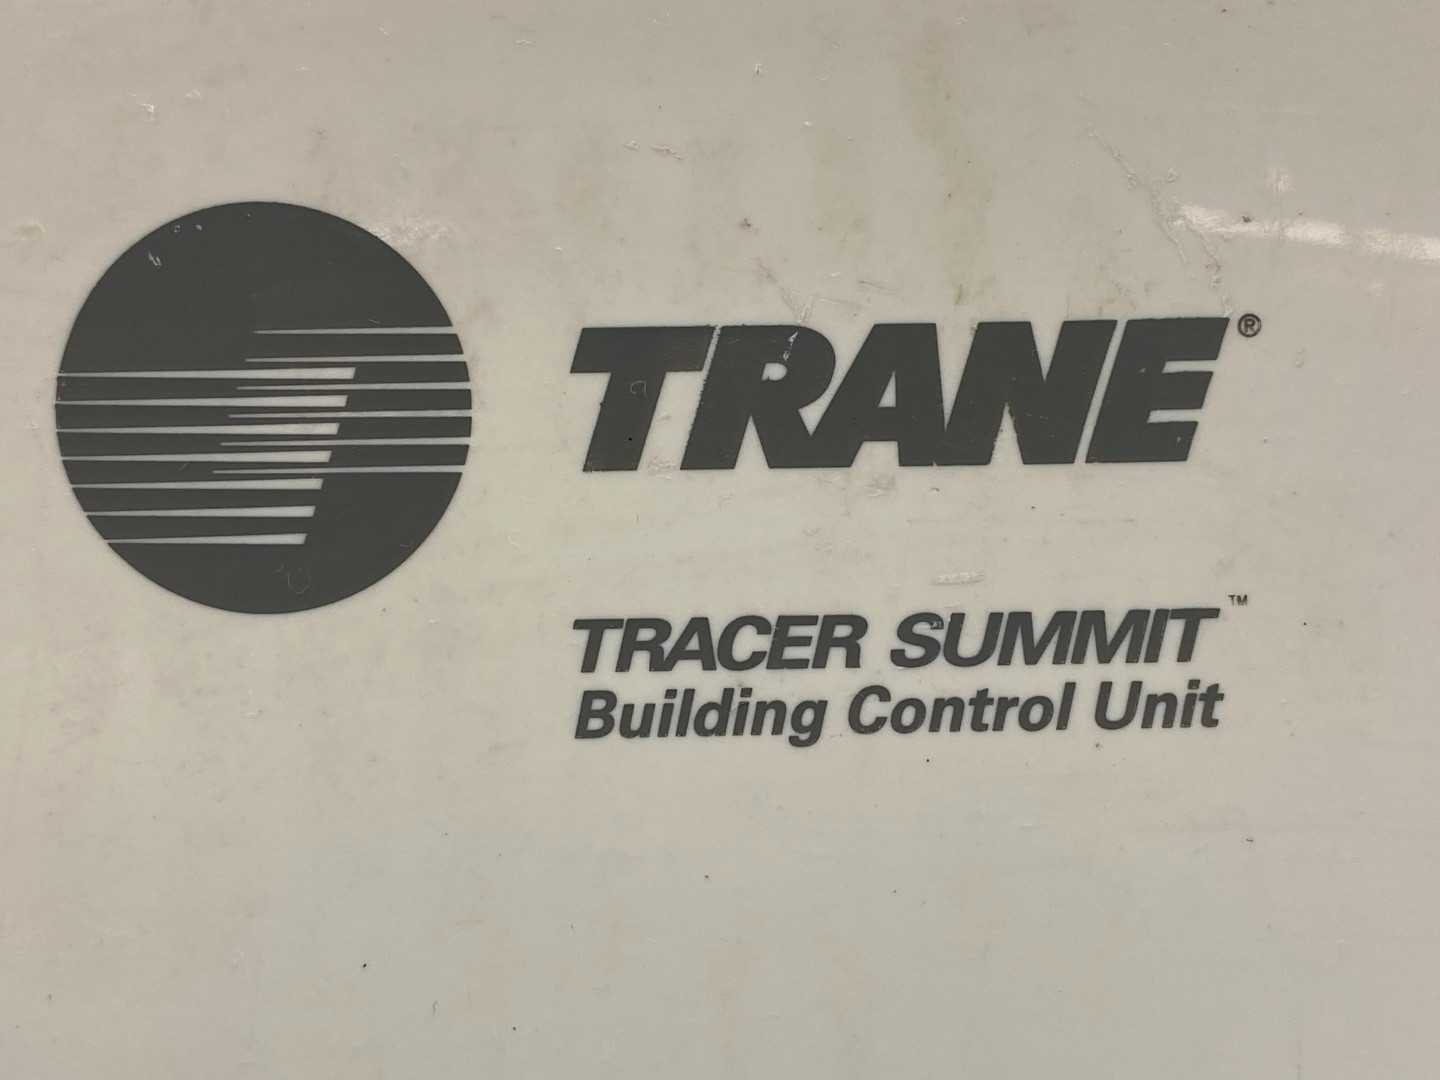 Trane Tracer Summit Building Control Unit BMTX001AAB010